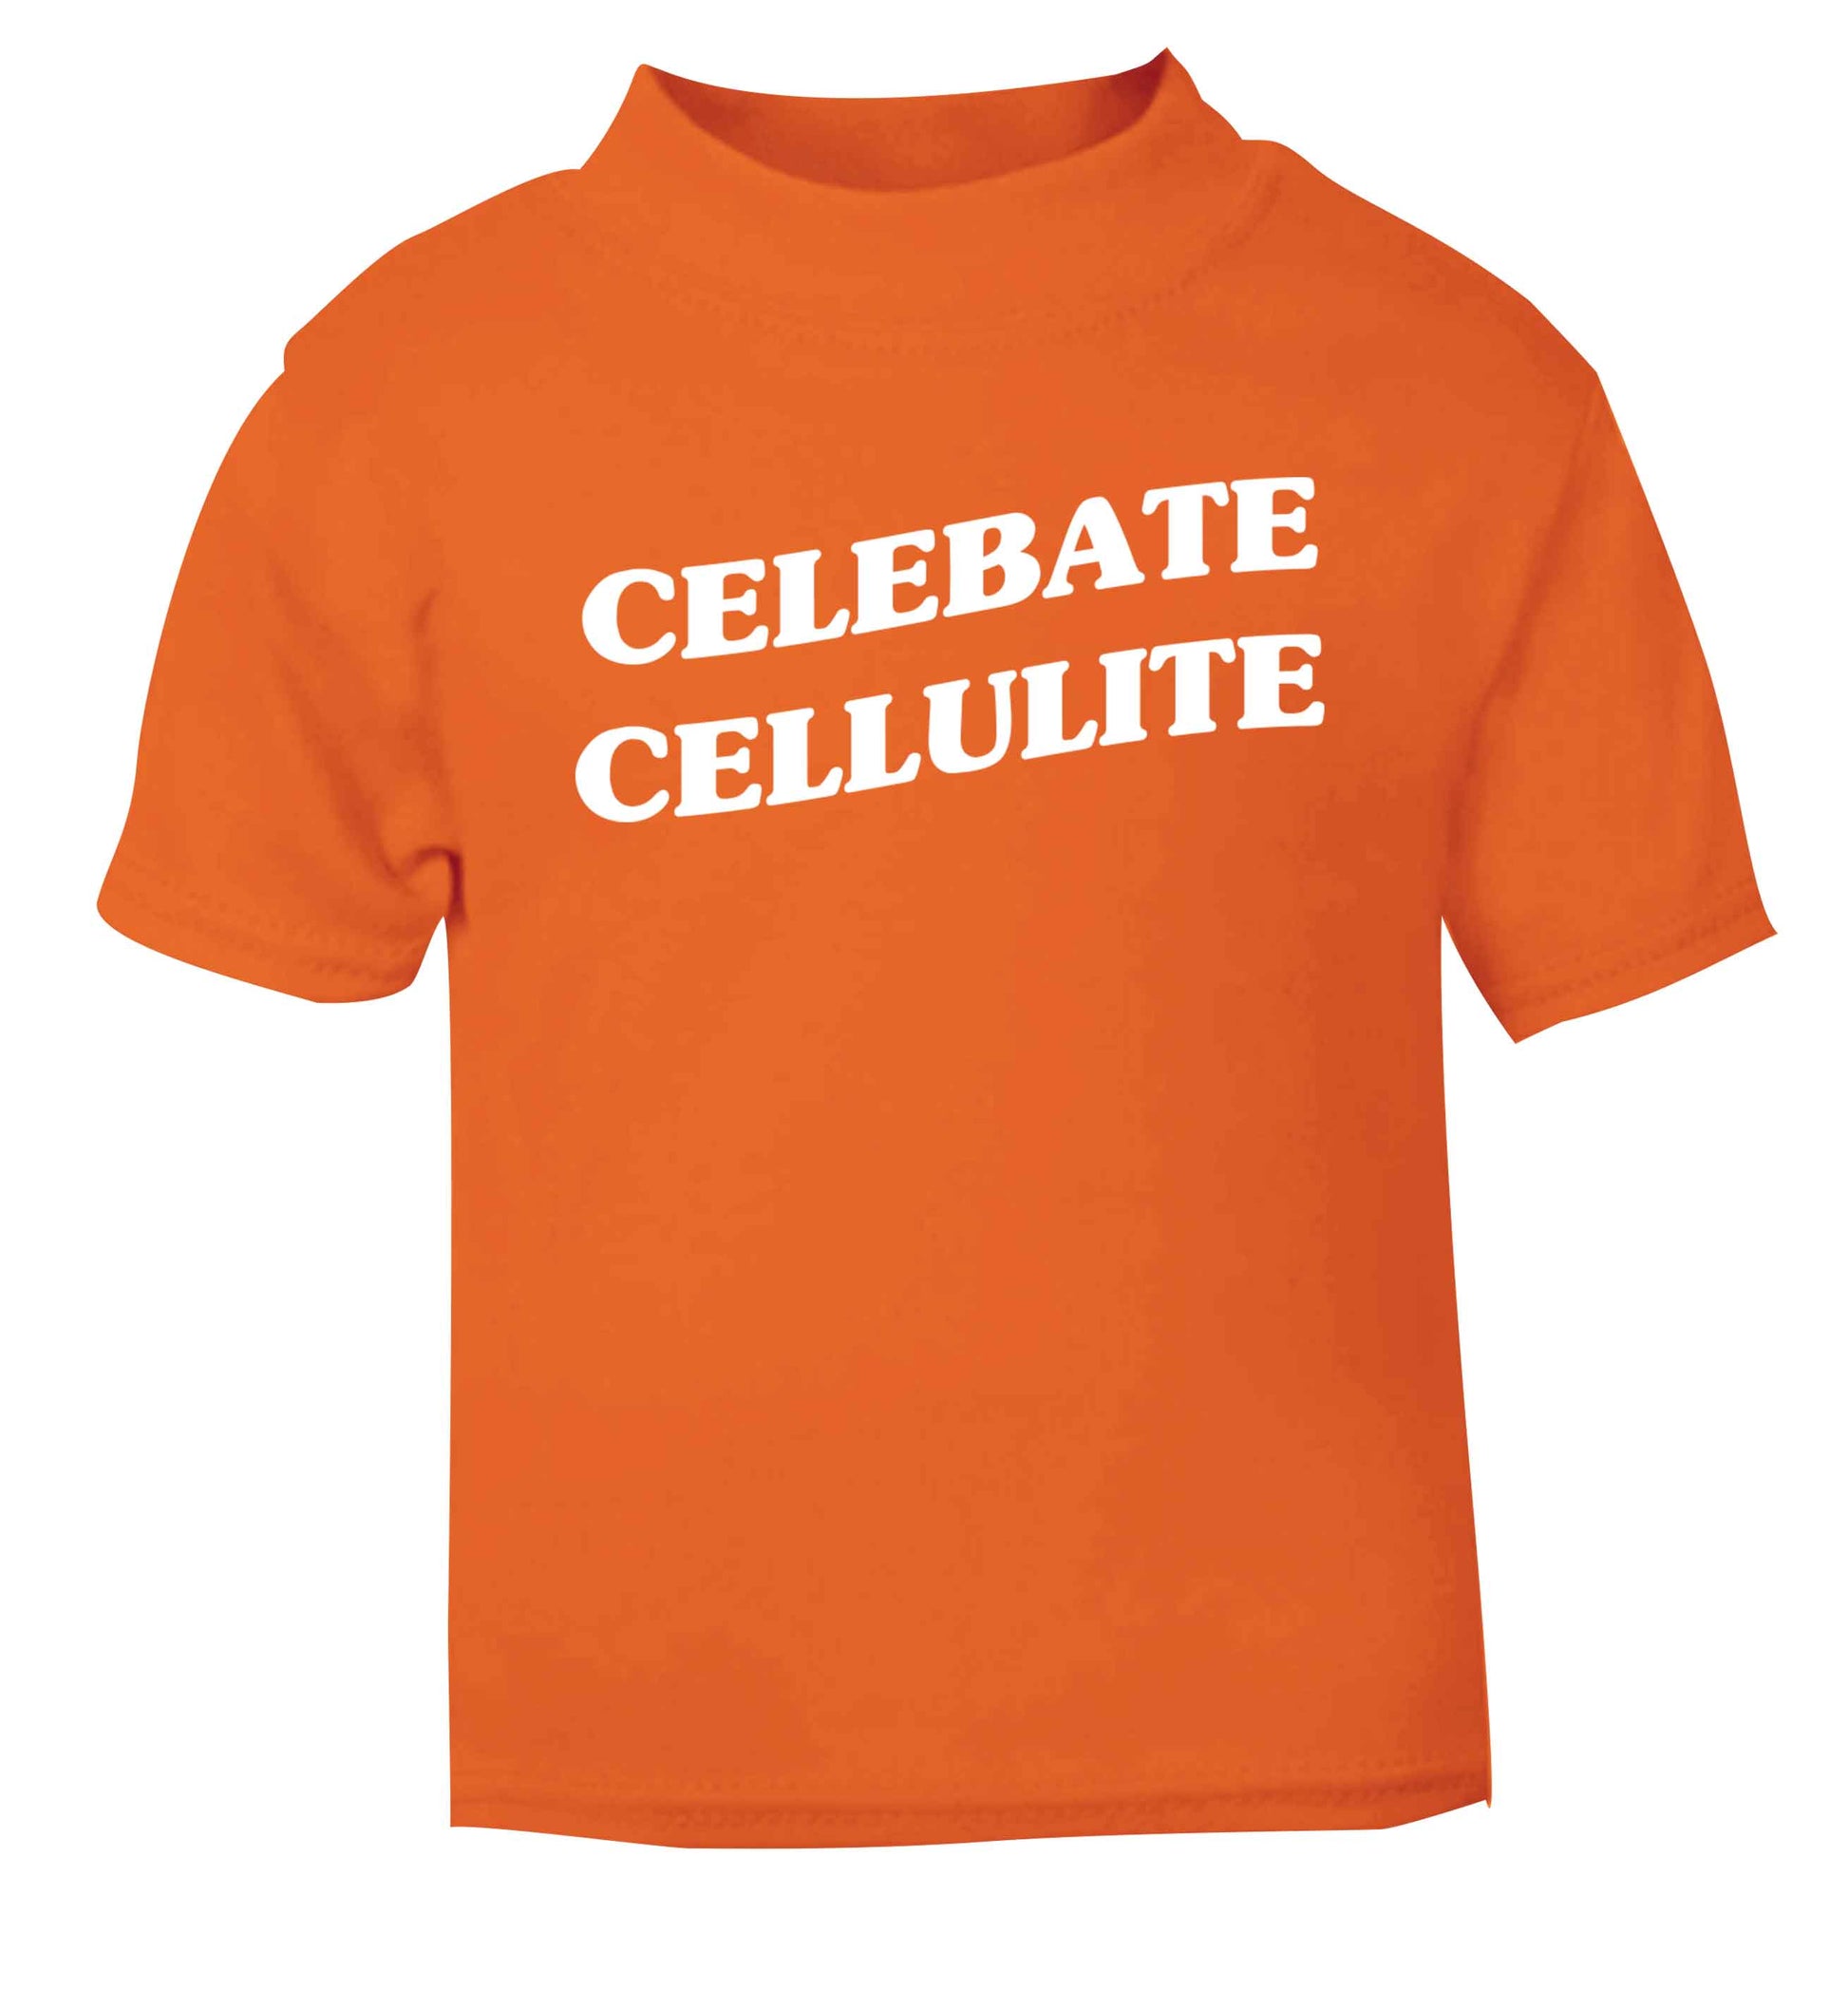 Celebrate cellulite orange baby toddler Tshirt 2 Years